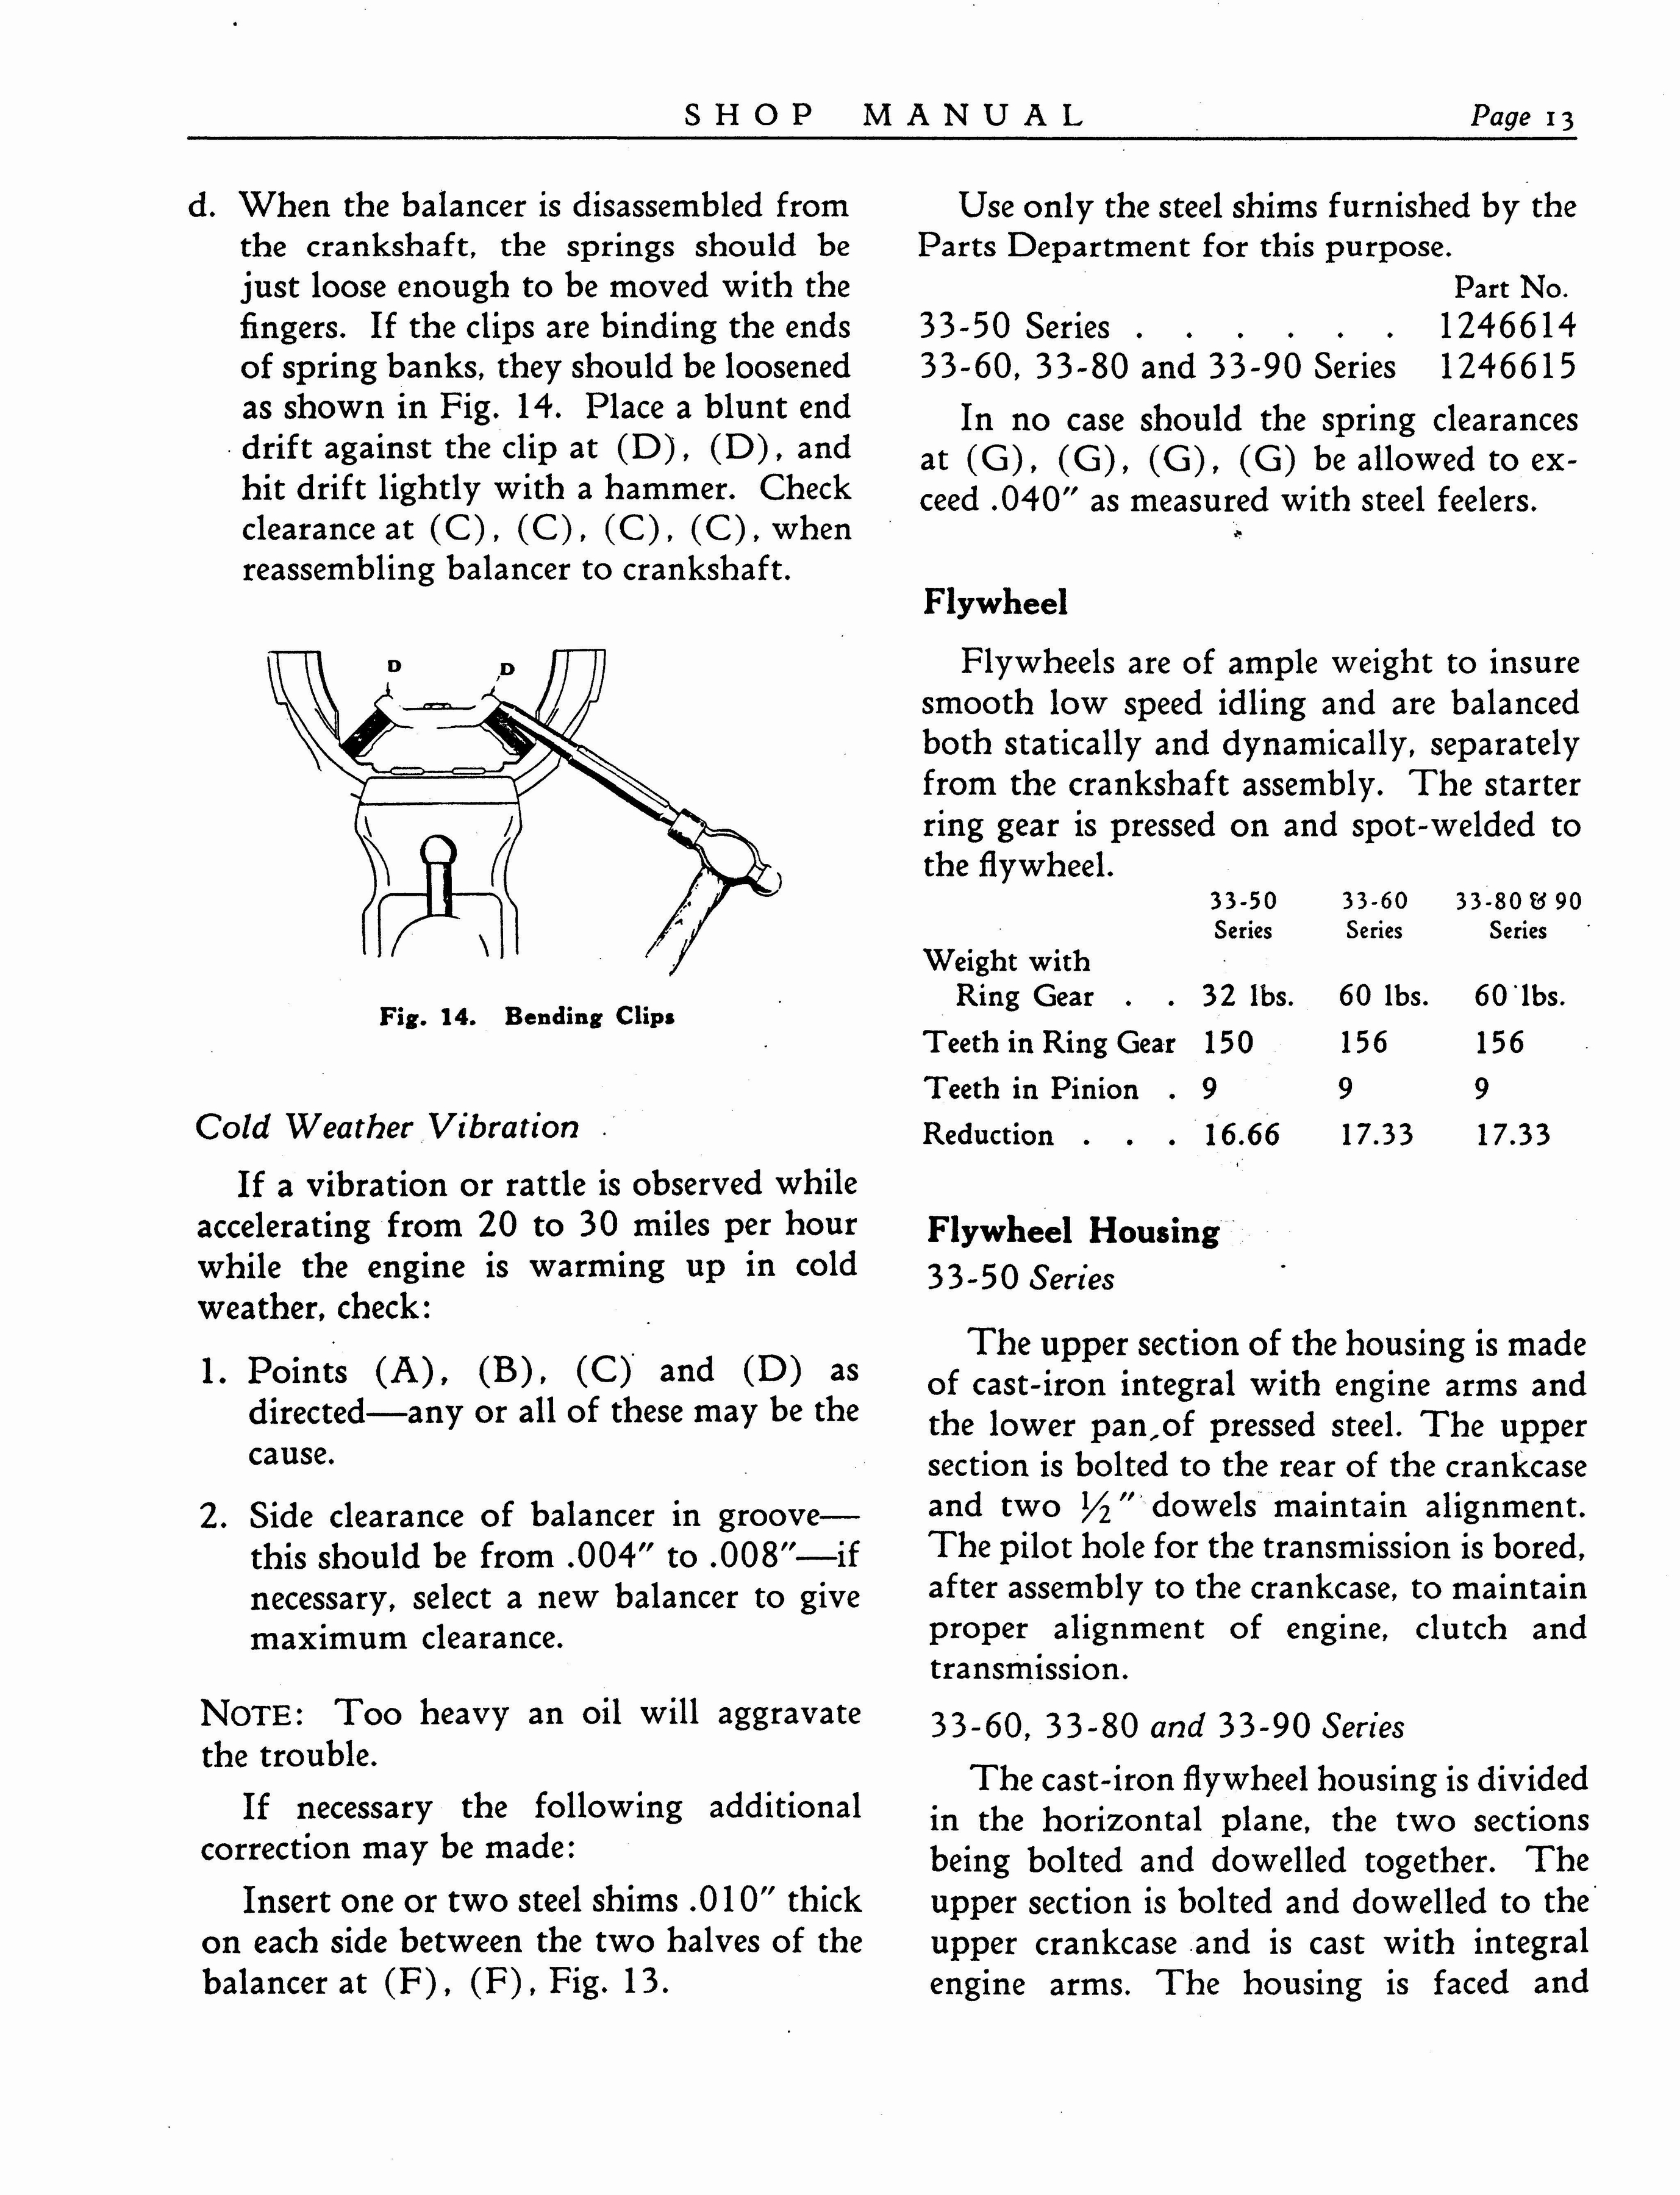 n_1933 Buick Shop Manual_Page_014.jpg